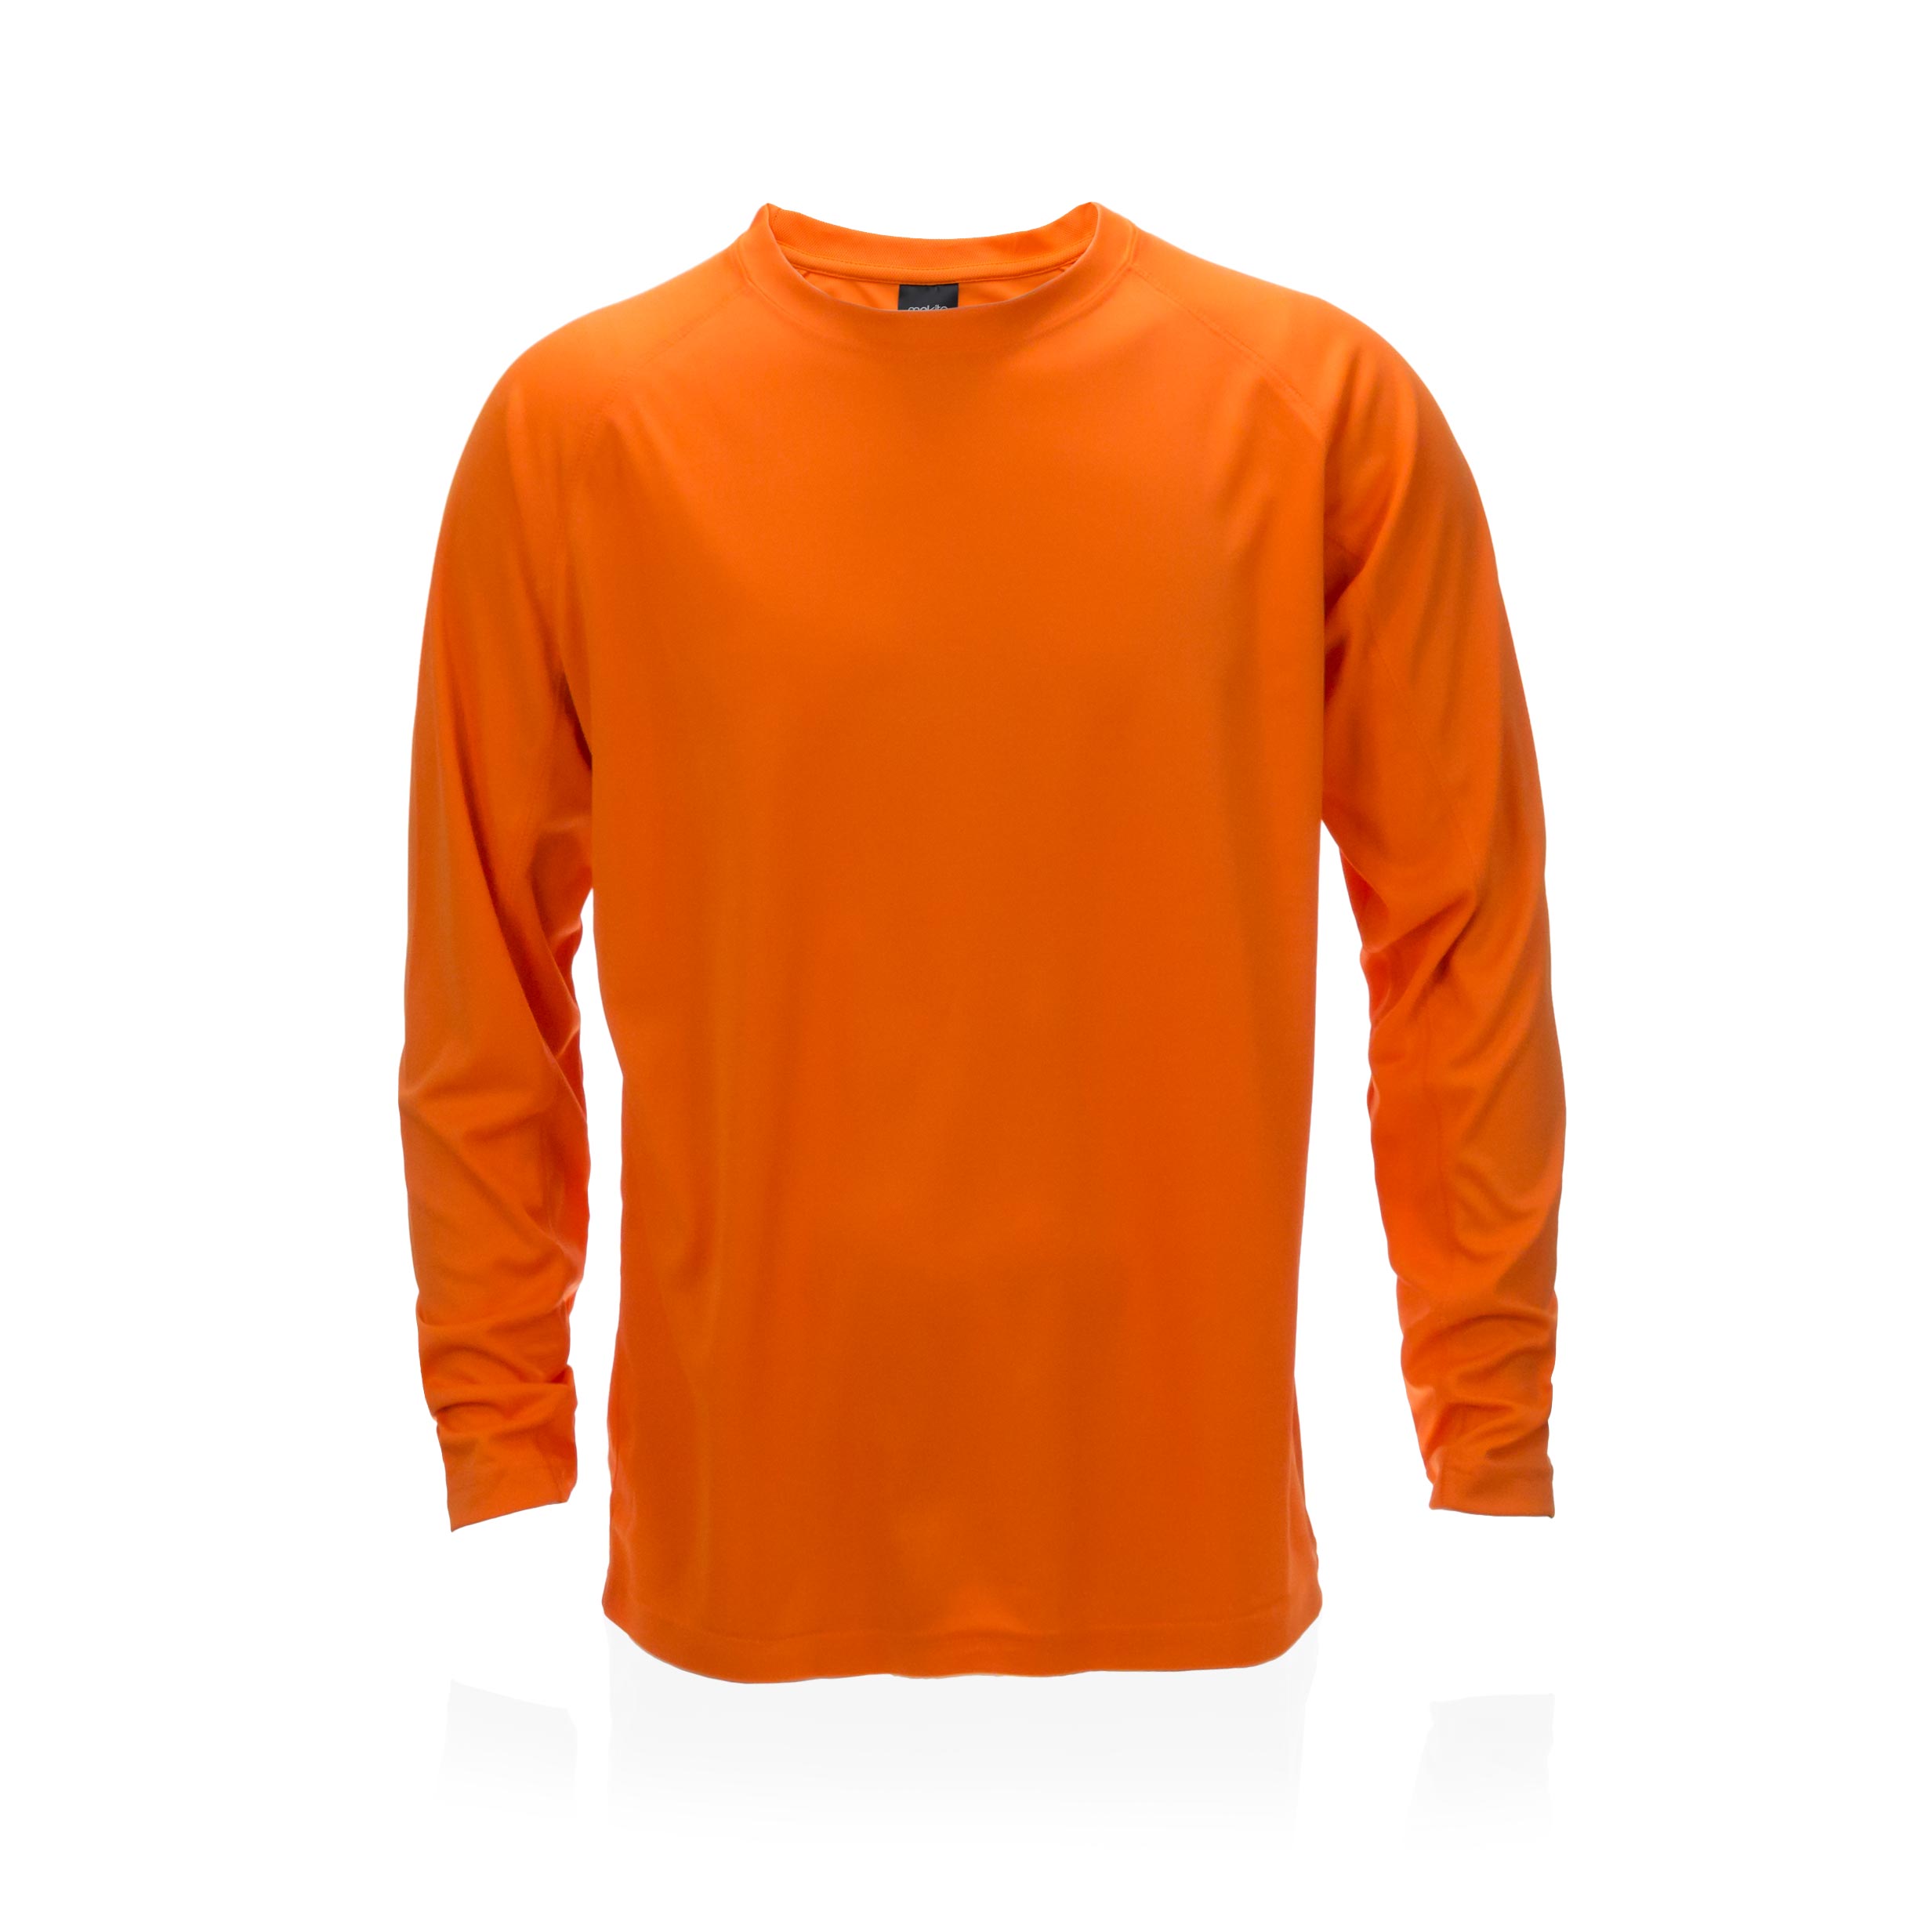 Camiseta Adulto McComb naranja talla S